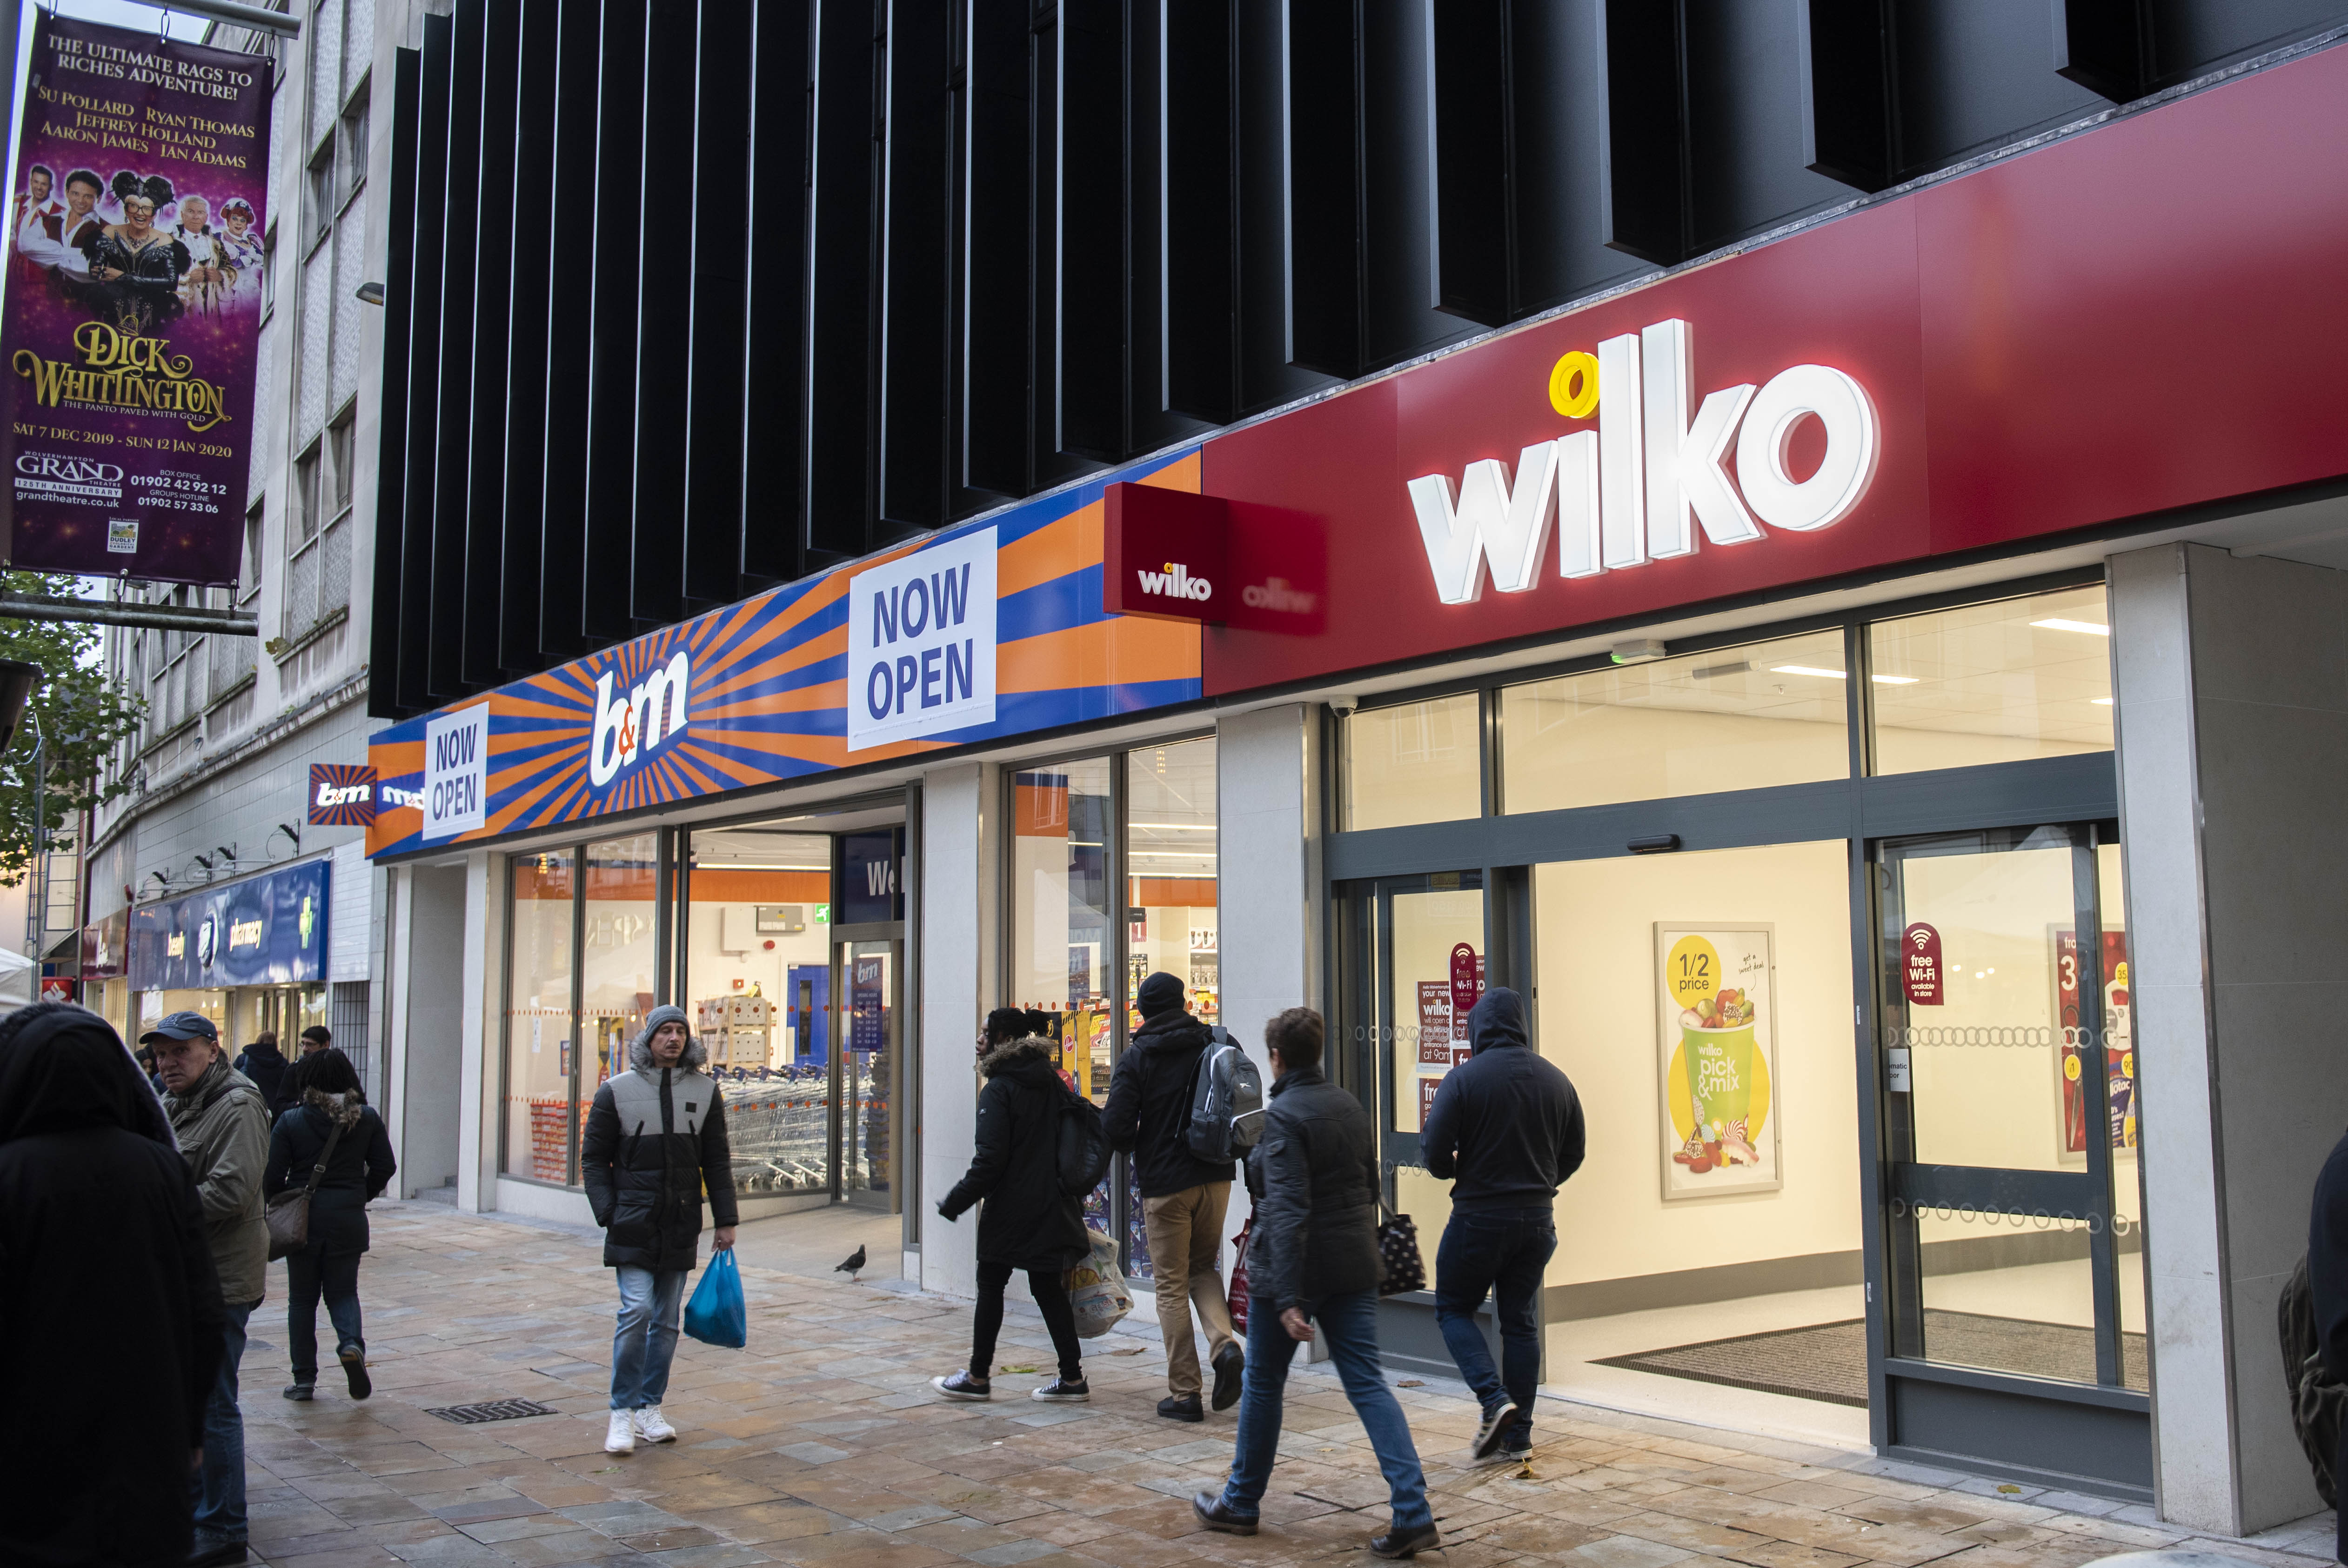 Brand new 24,000 sq ft Wilko now open in the Mander Centre, Wolverhampton